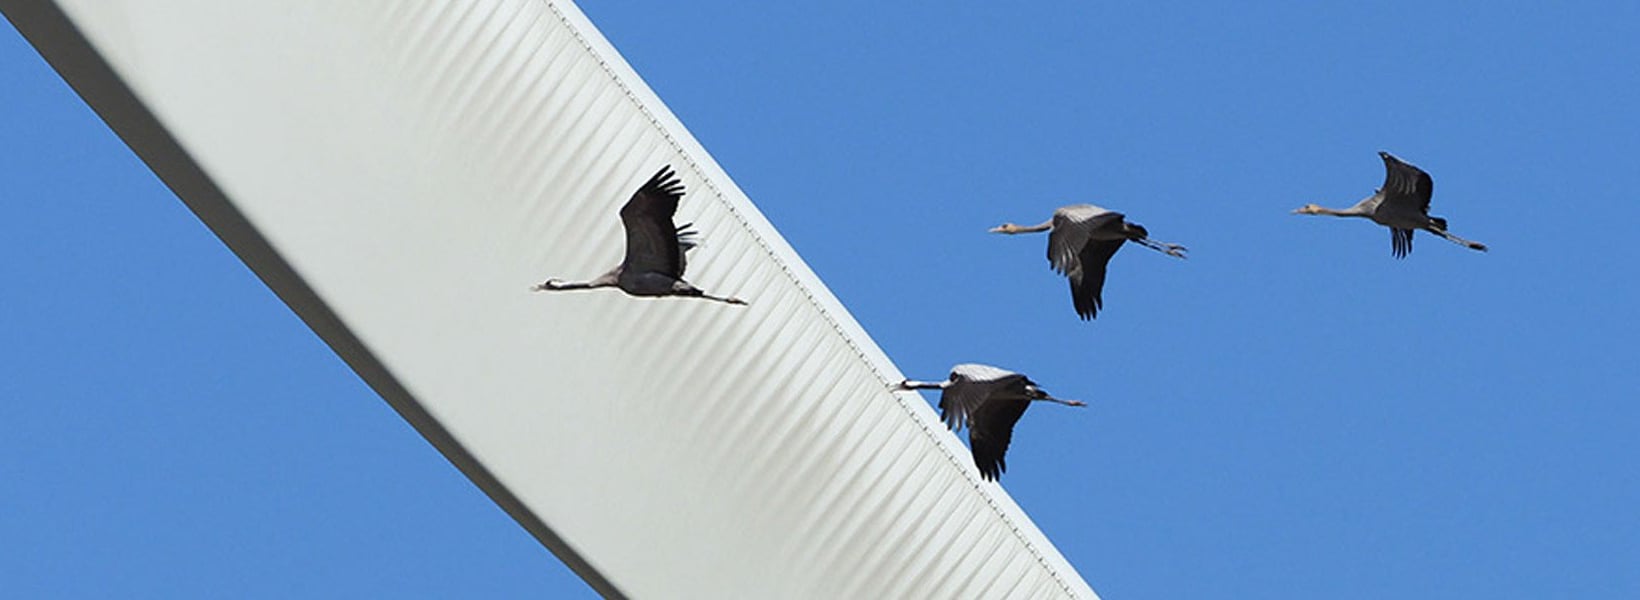 Zugvögel fliegen an Windrad vorbei